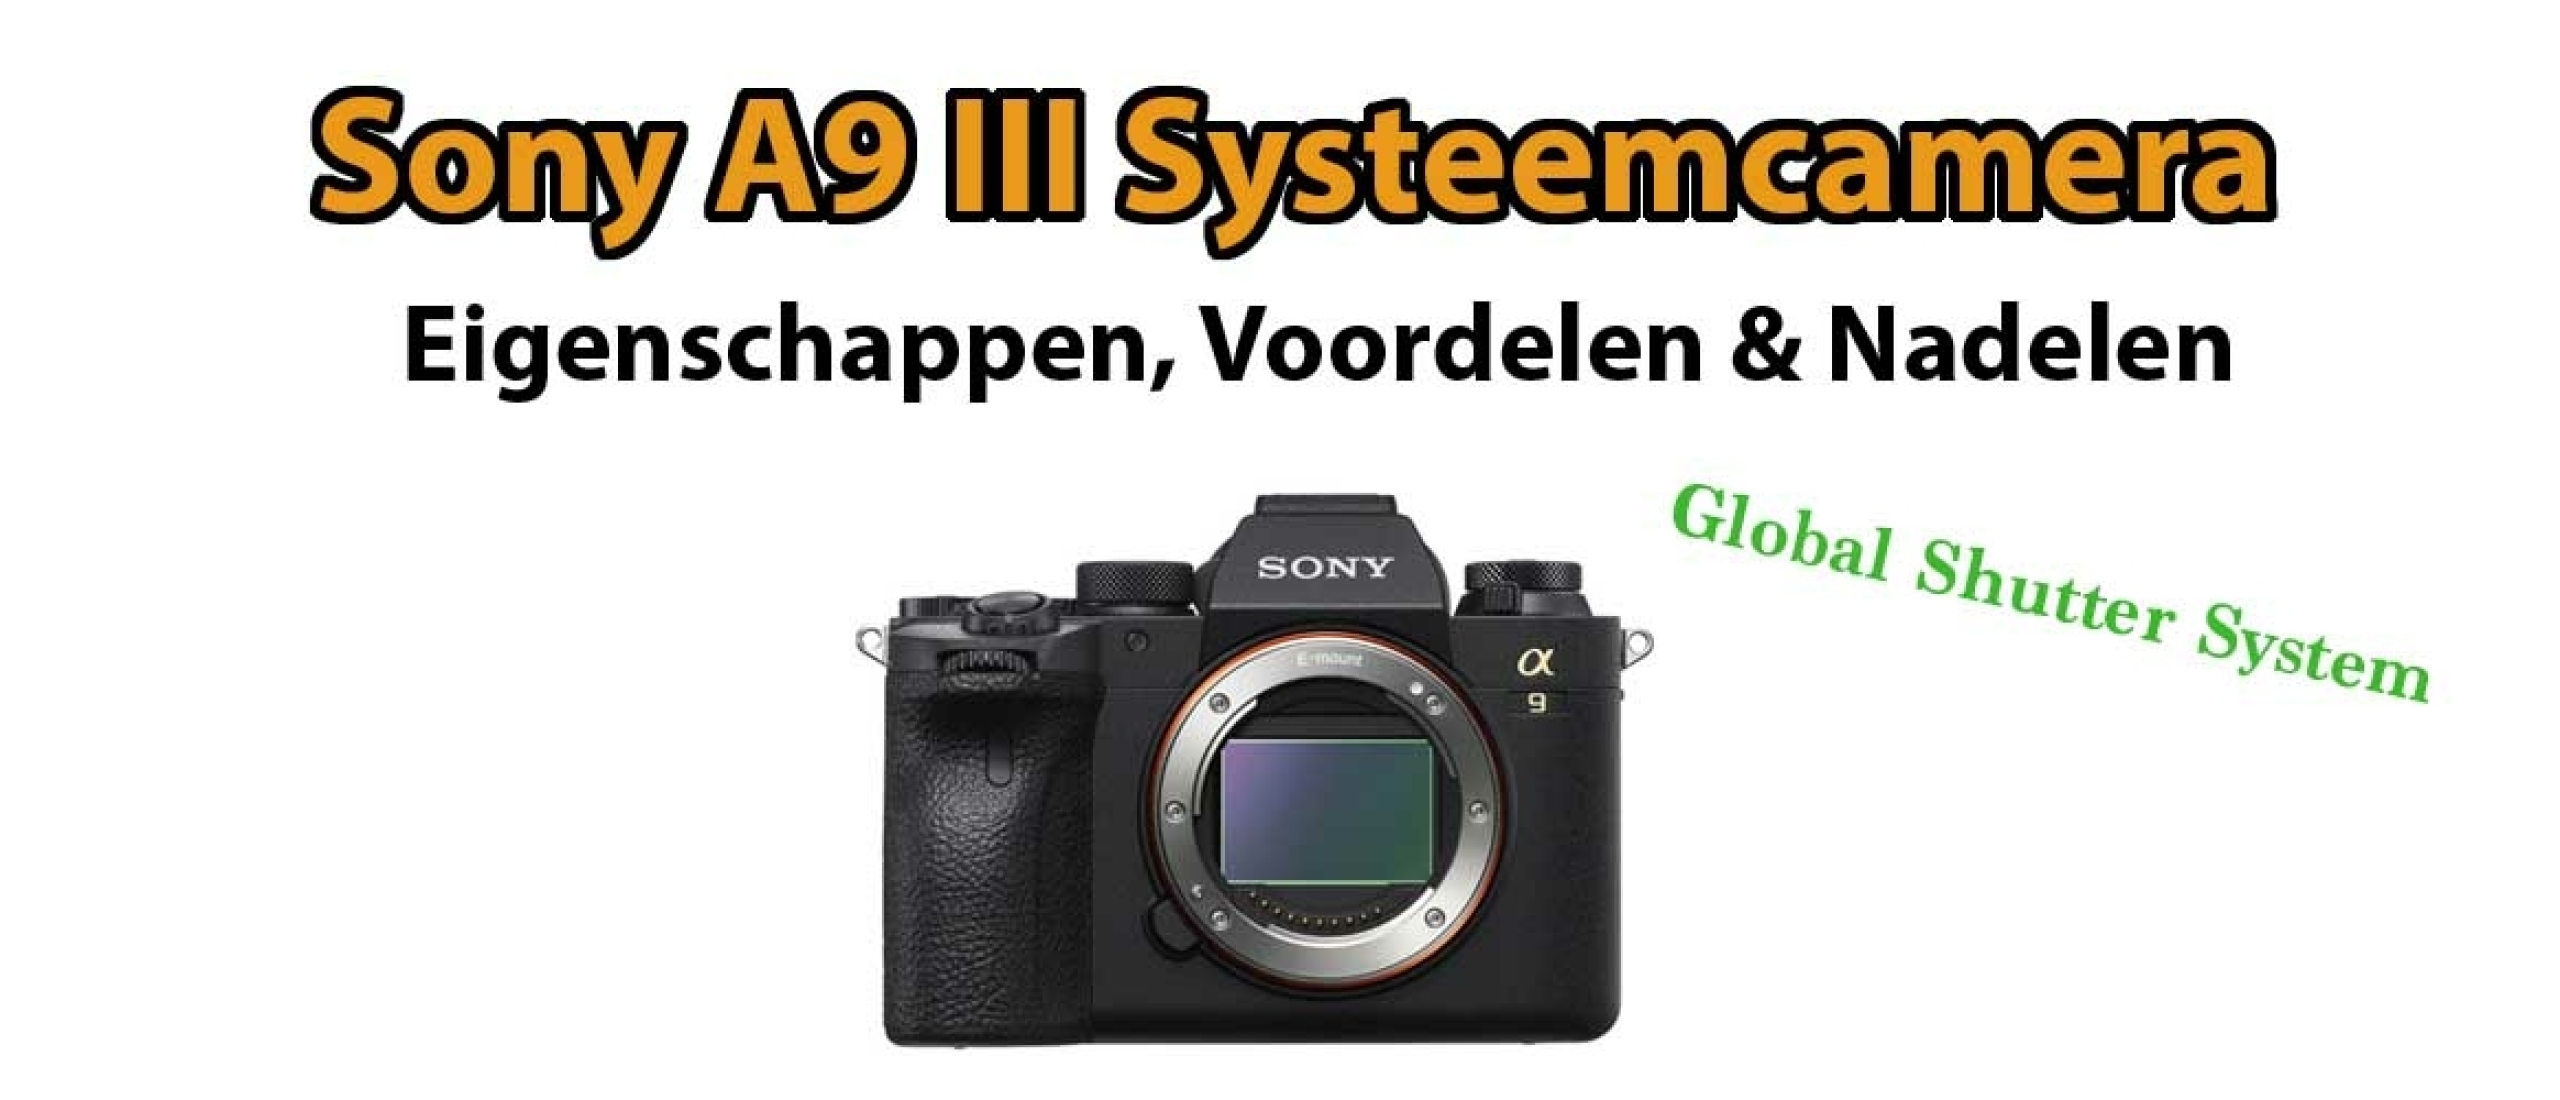 Sony A9 III systeemcamera